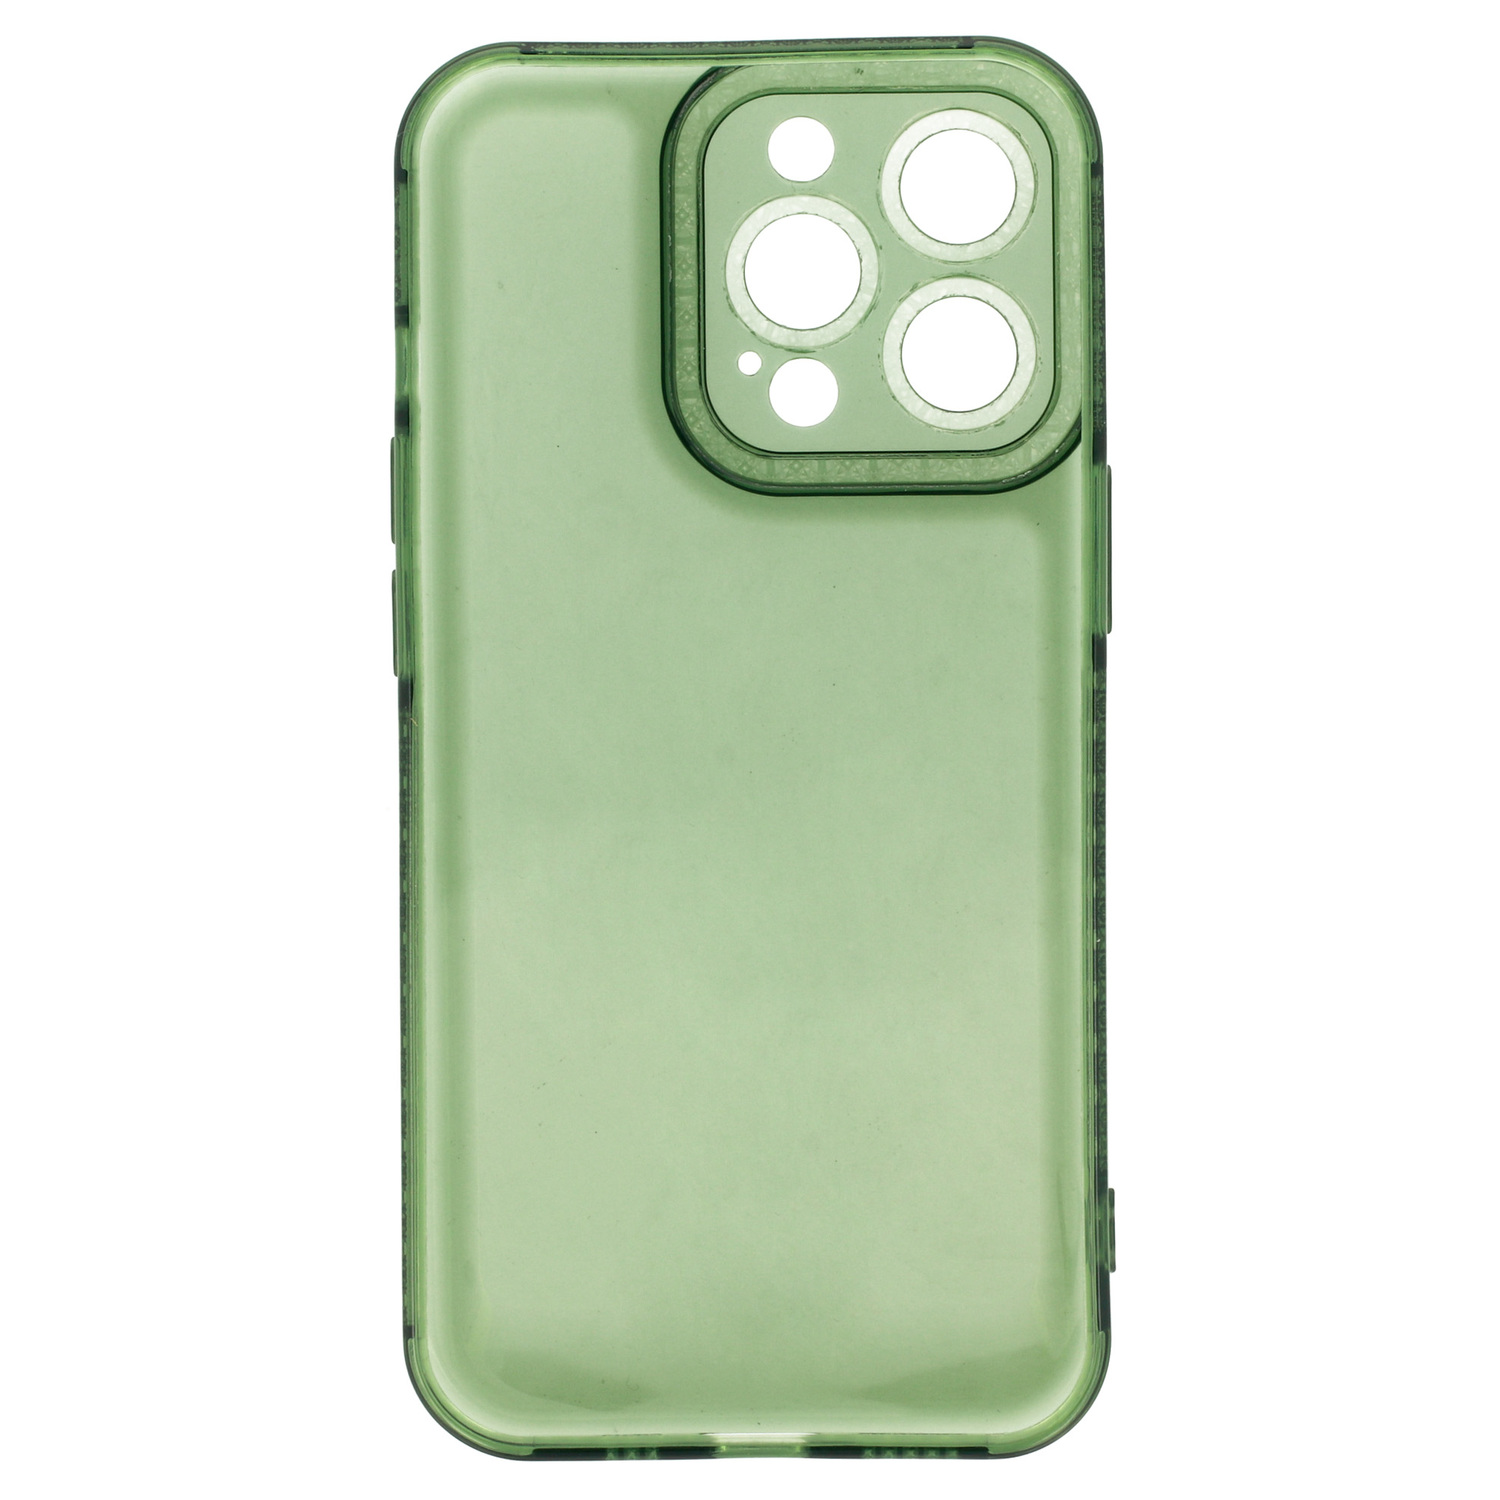 Pokrowiec etui silikonowe Crystal Diamond Case zielone APPLE iPhone 11 Pro Max / 5